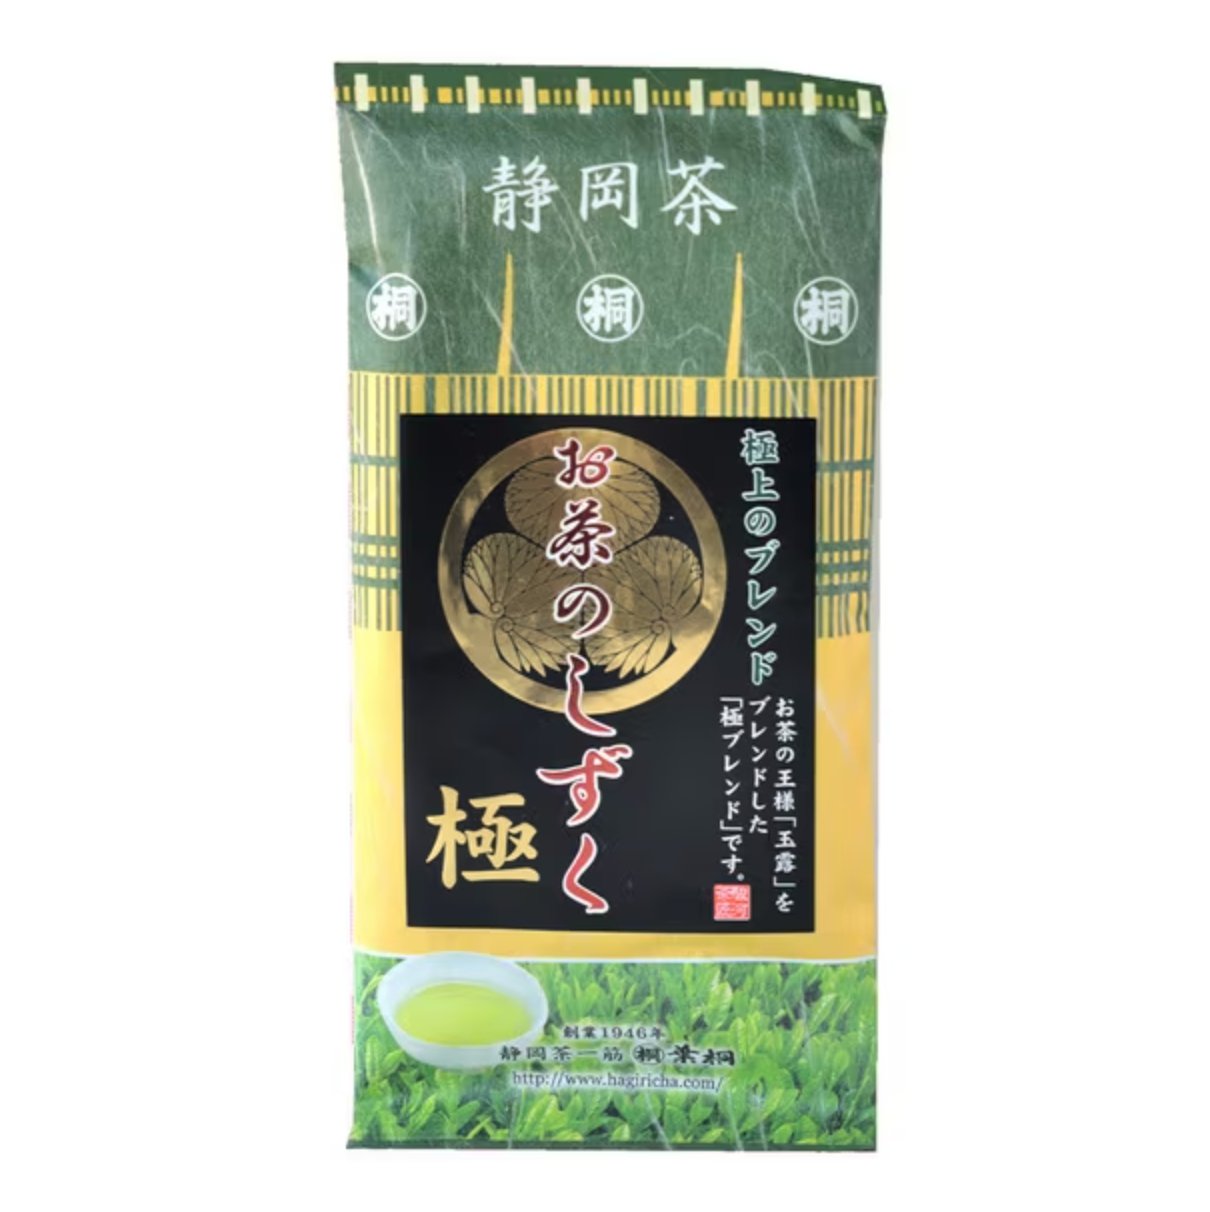 Hagiri Tea Drops from Shizuoka Extreme 100g - NihonMura